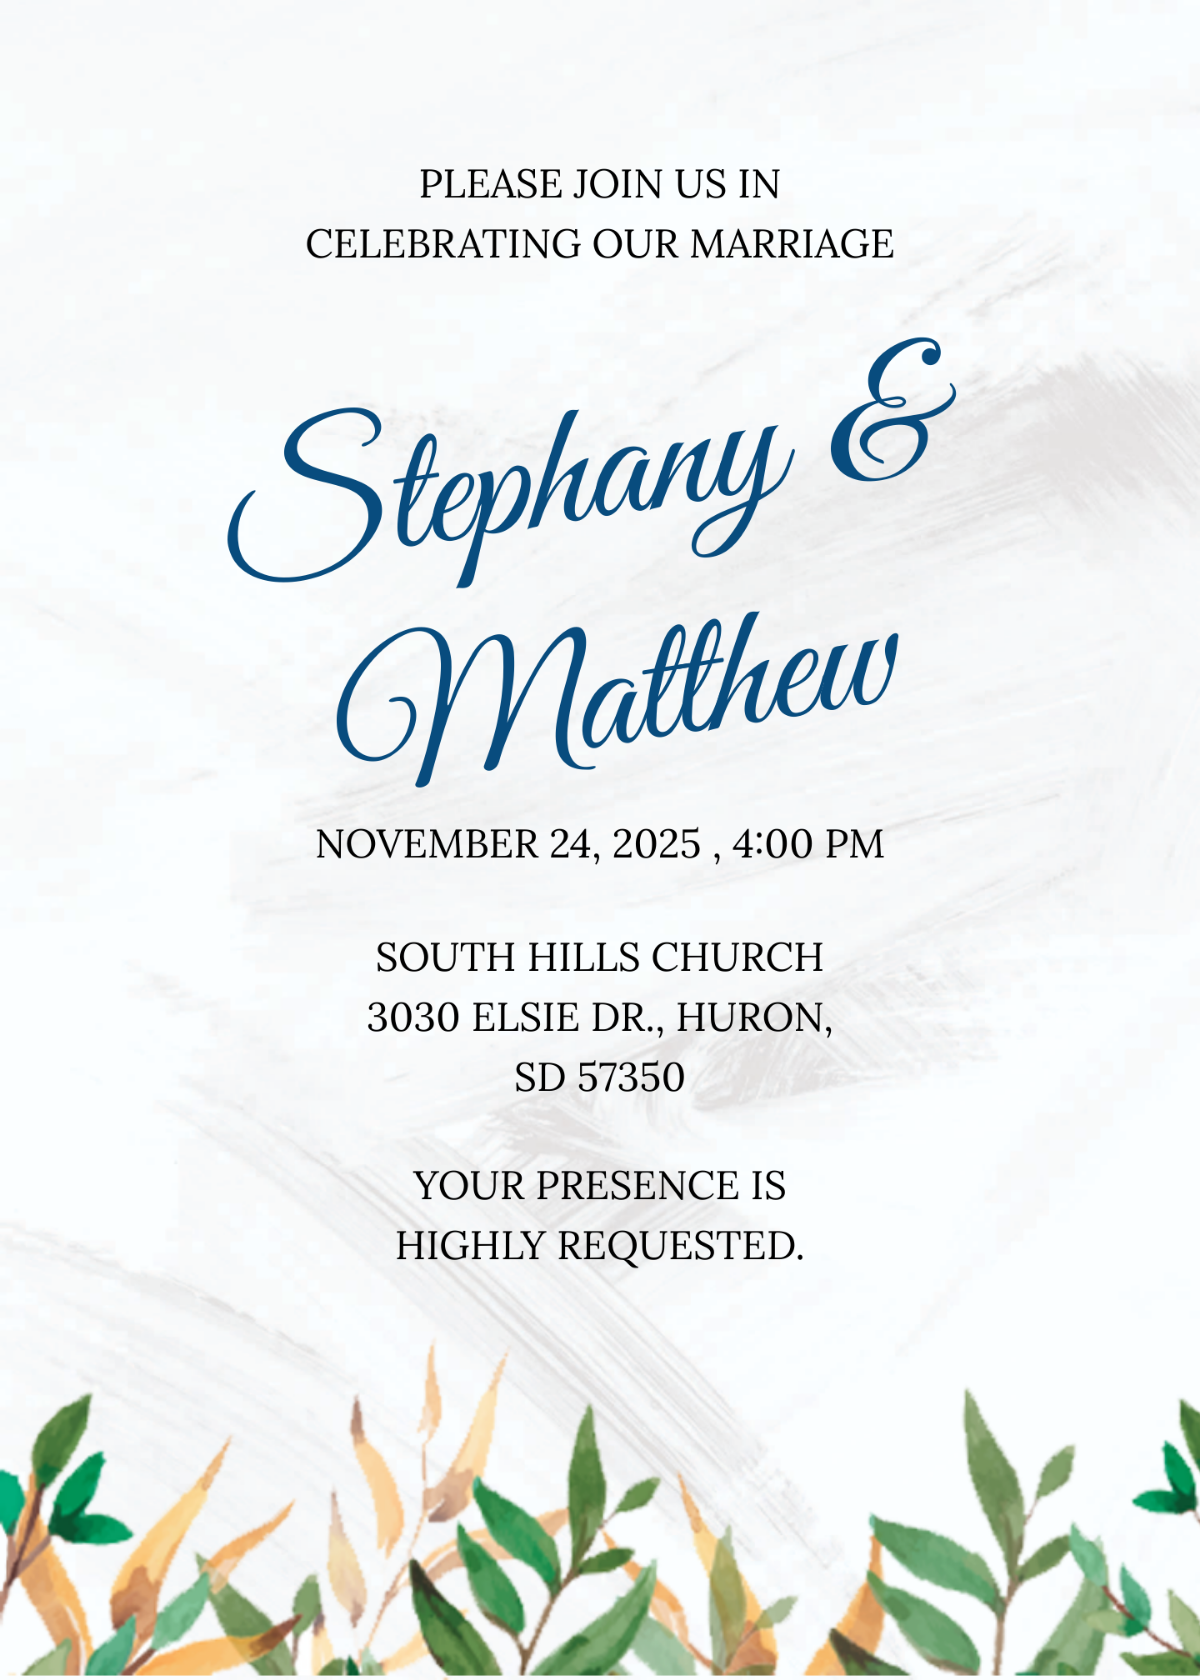 Calligraphy Wedding Invitation Template